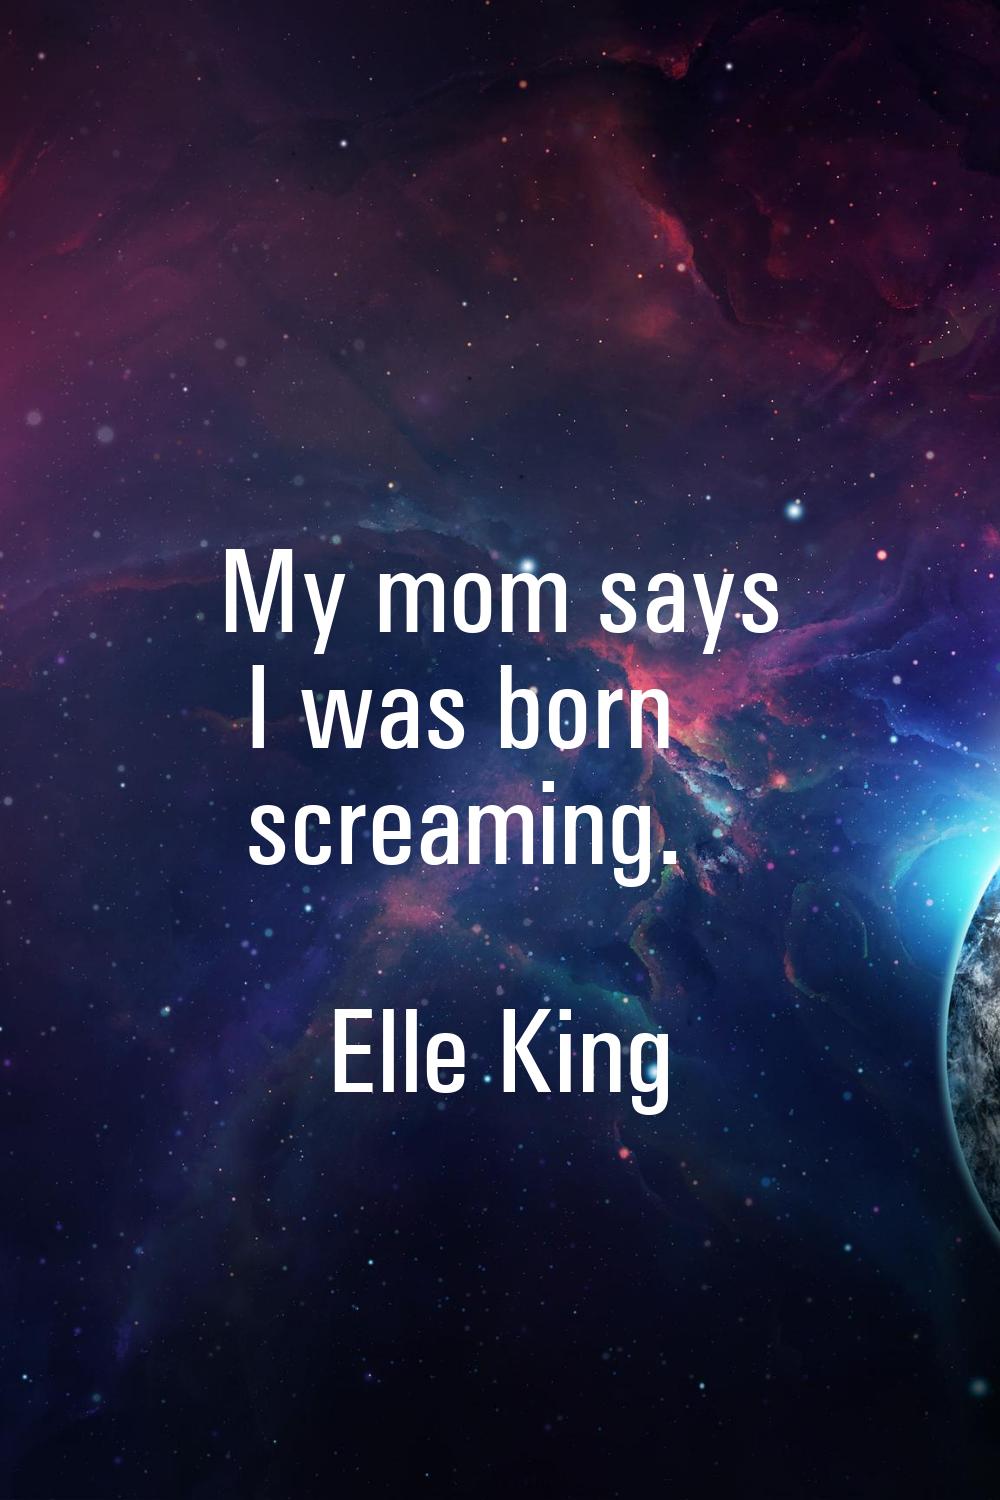 My mom says I was born screaming.